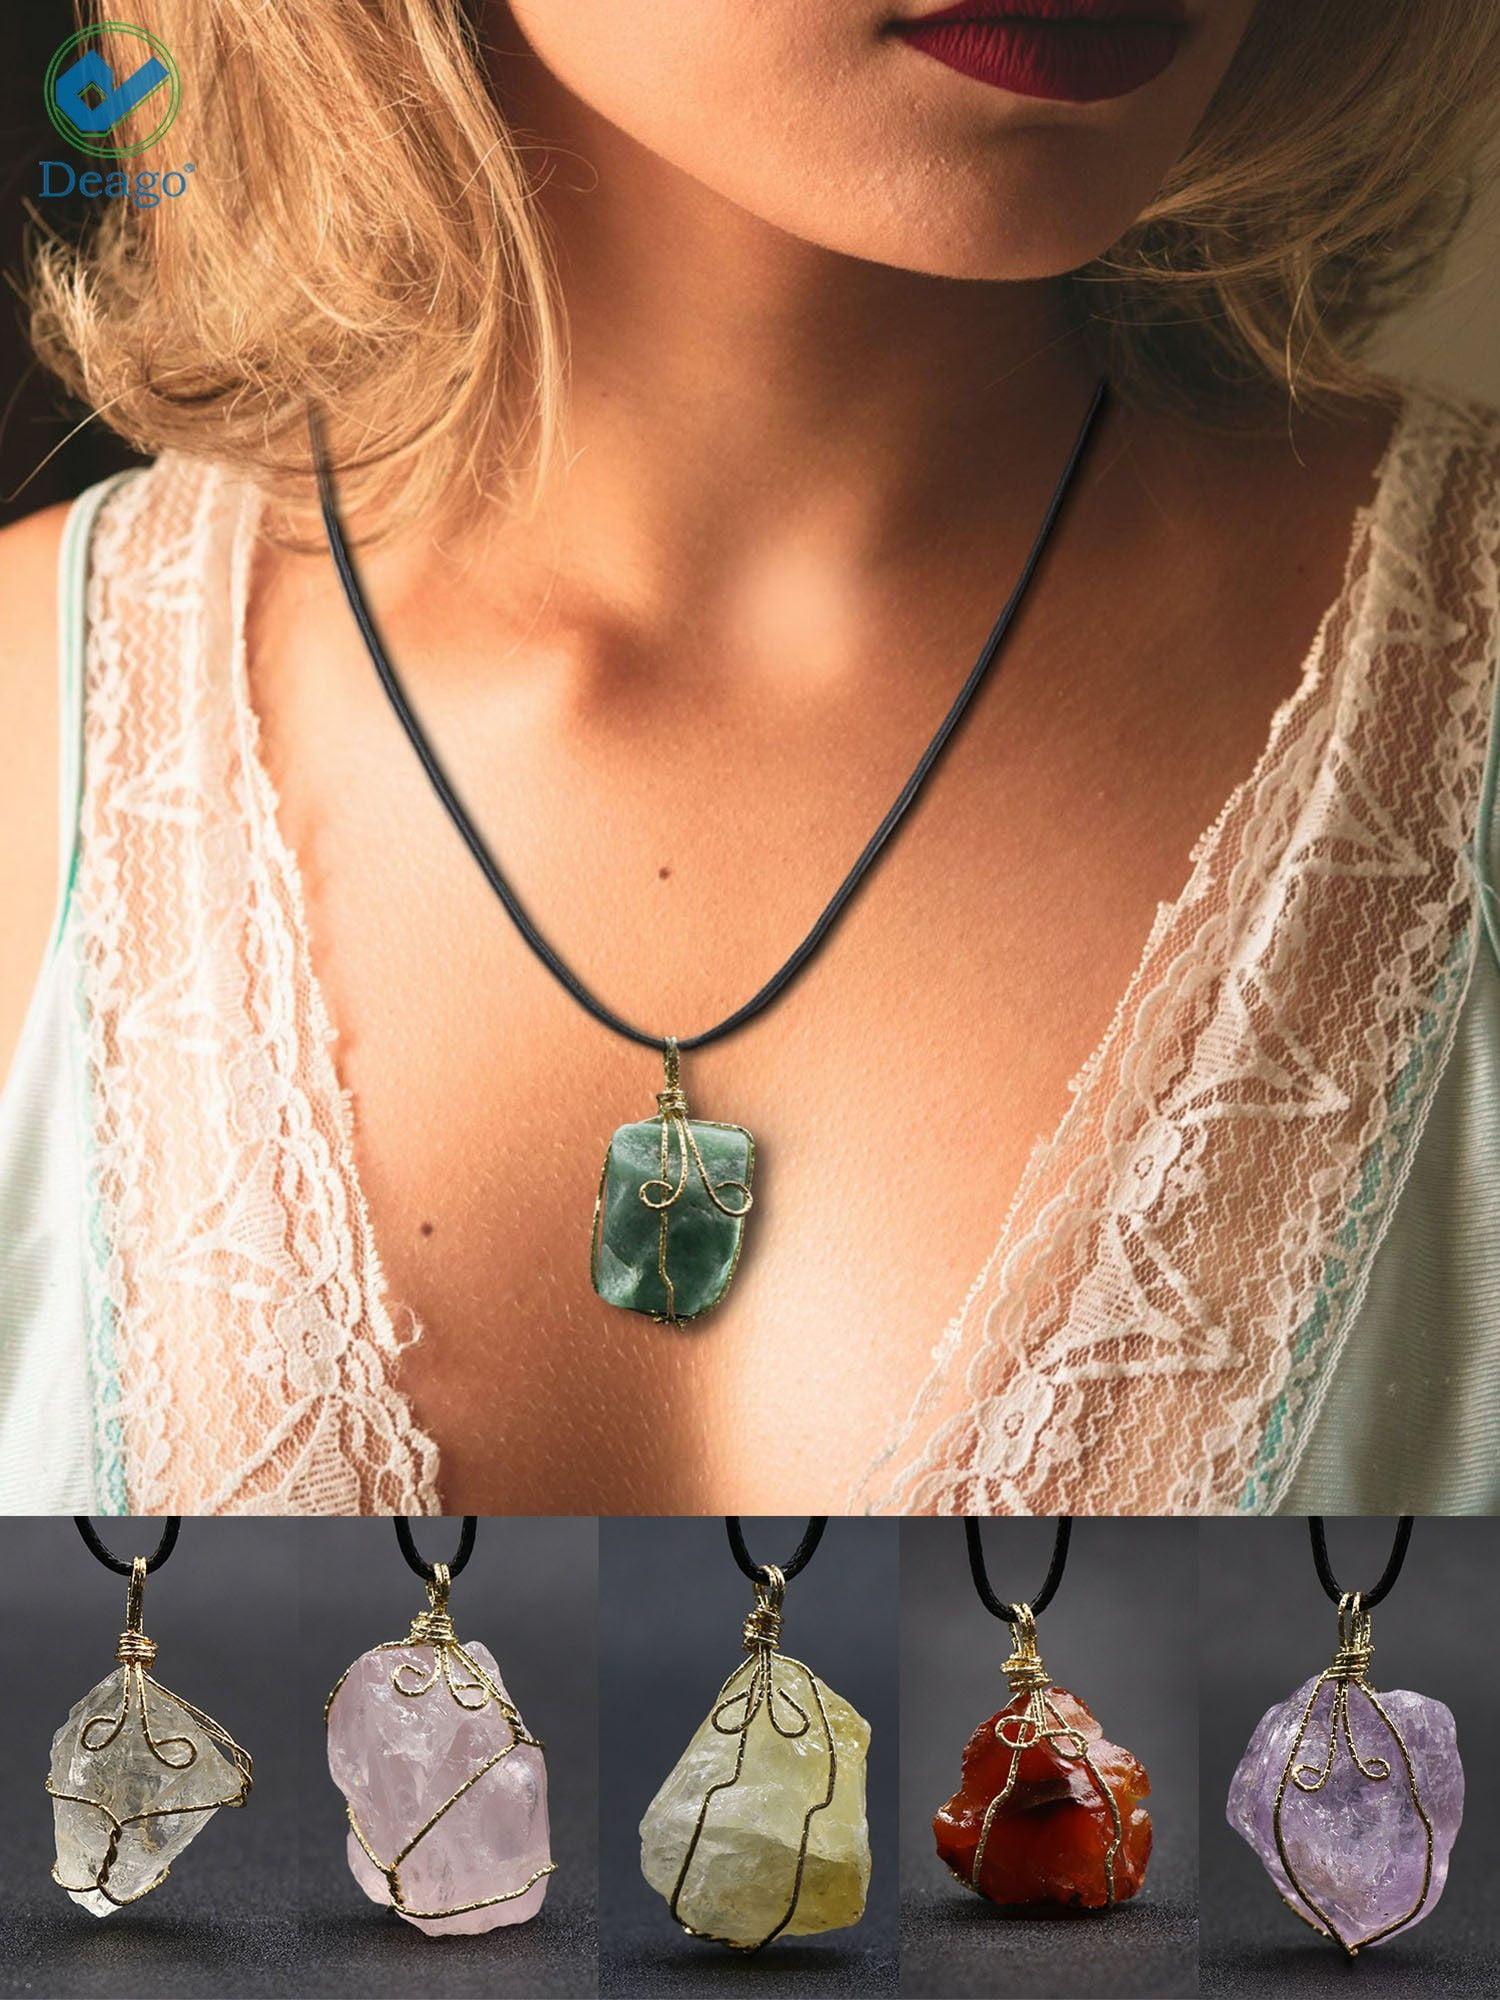 Pendant Hexagonal Healing Crystal Necklace Natural Stone Necklace Amethyst  | eBay